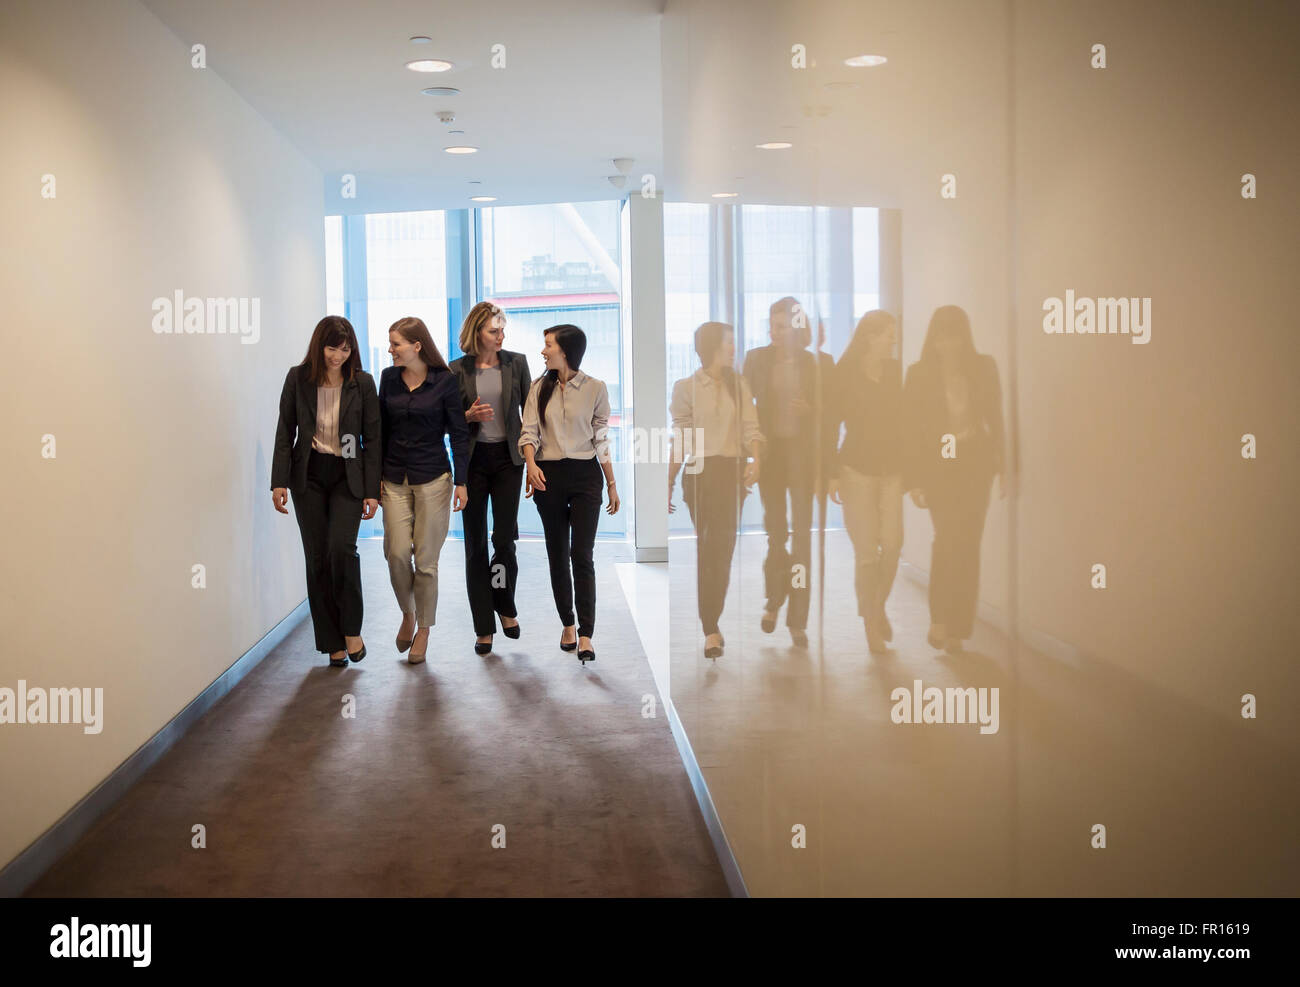 Businesswomen walking in a row in office corridor Banque D'Images